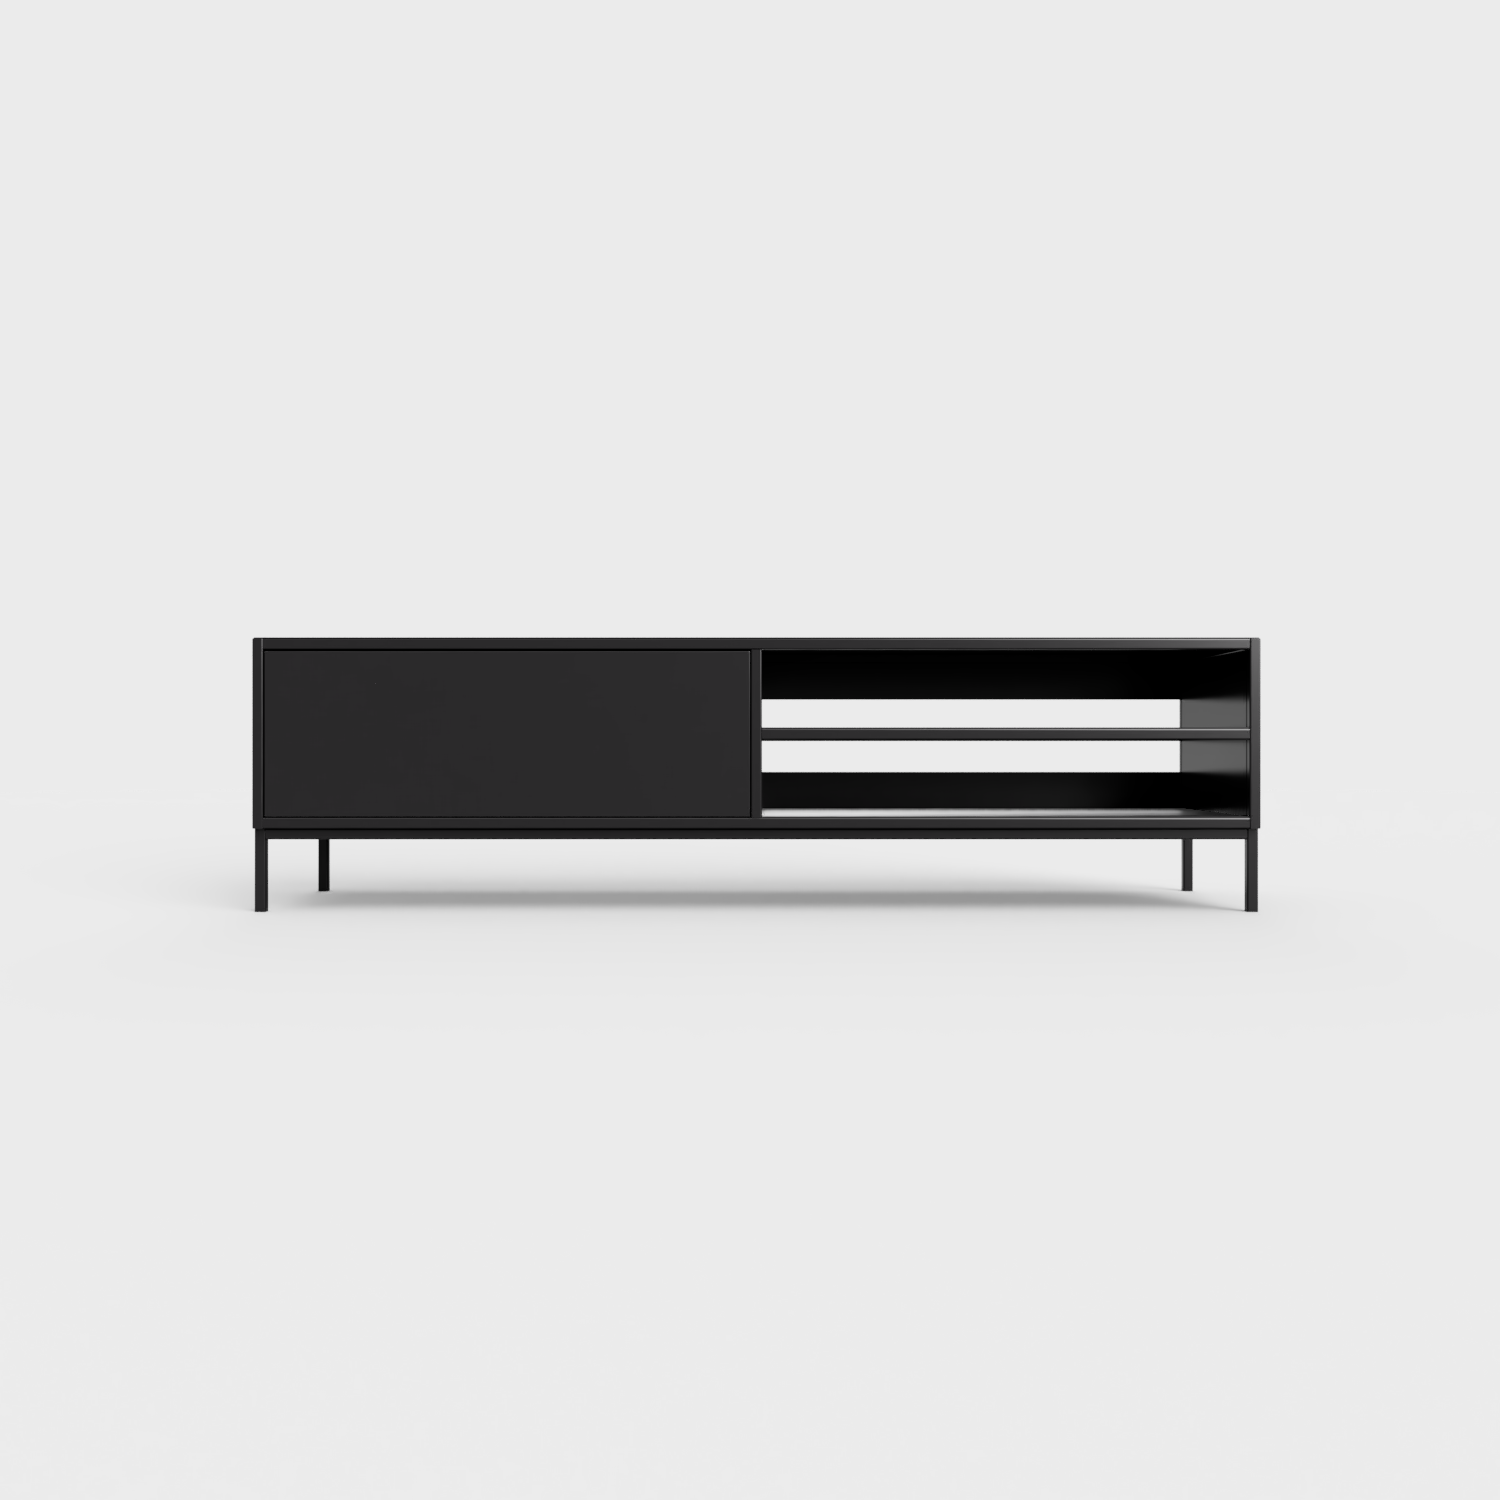 Prunus 02 Lowboard in Black color, powder-coated steel, elegant and modern piece of furniture for your living room